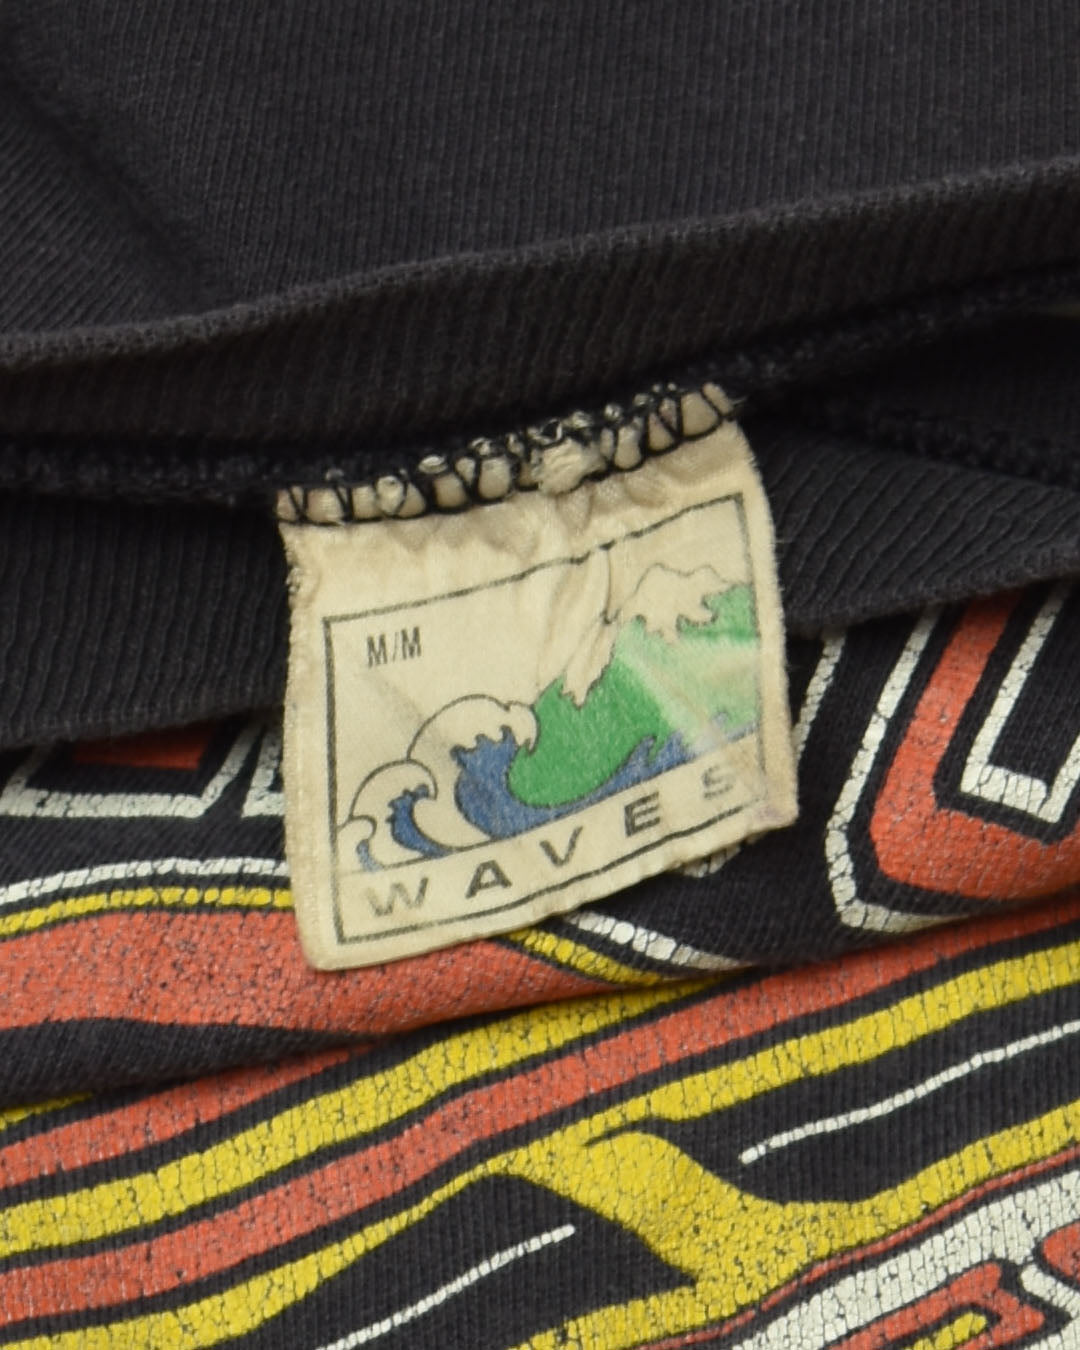 Vintage 90s Vancouver Canucks Speed Skate Single Stitch T-shirt Size M